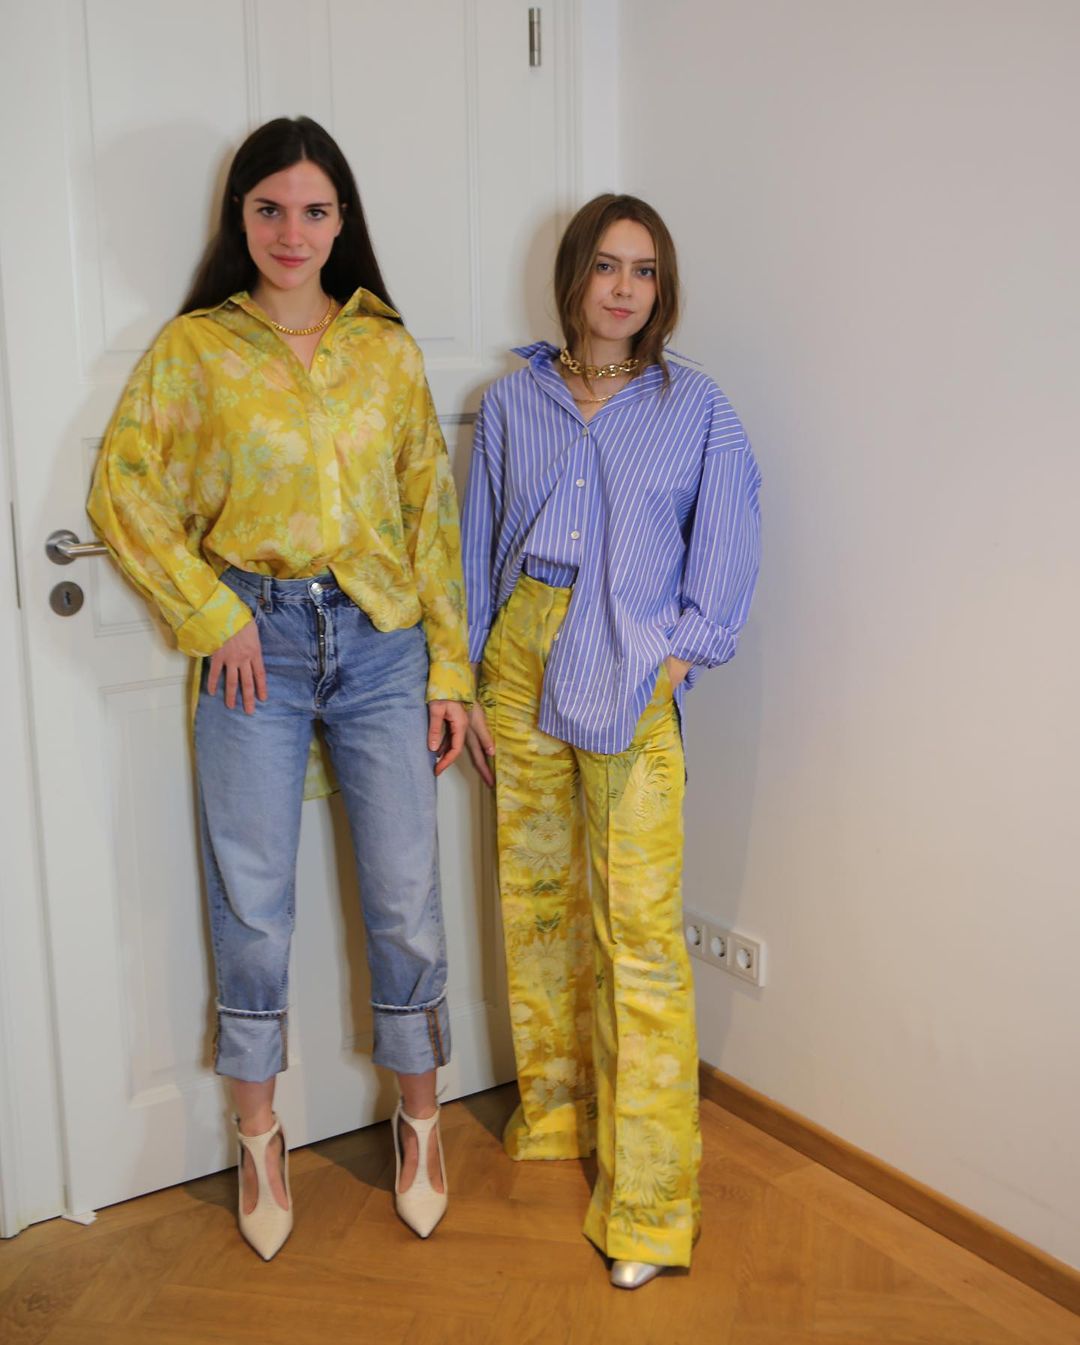 Silk Pants Outfits ideas – 23 Ways To Wear Silk Pants In 2022